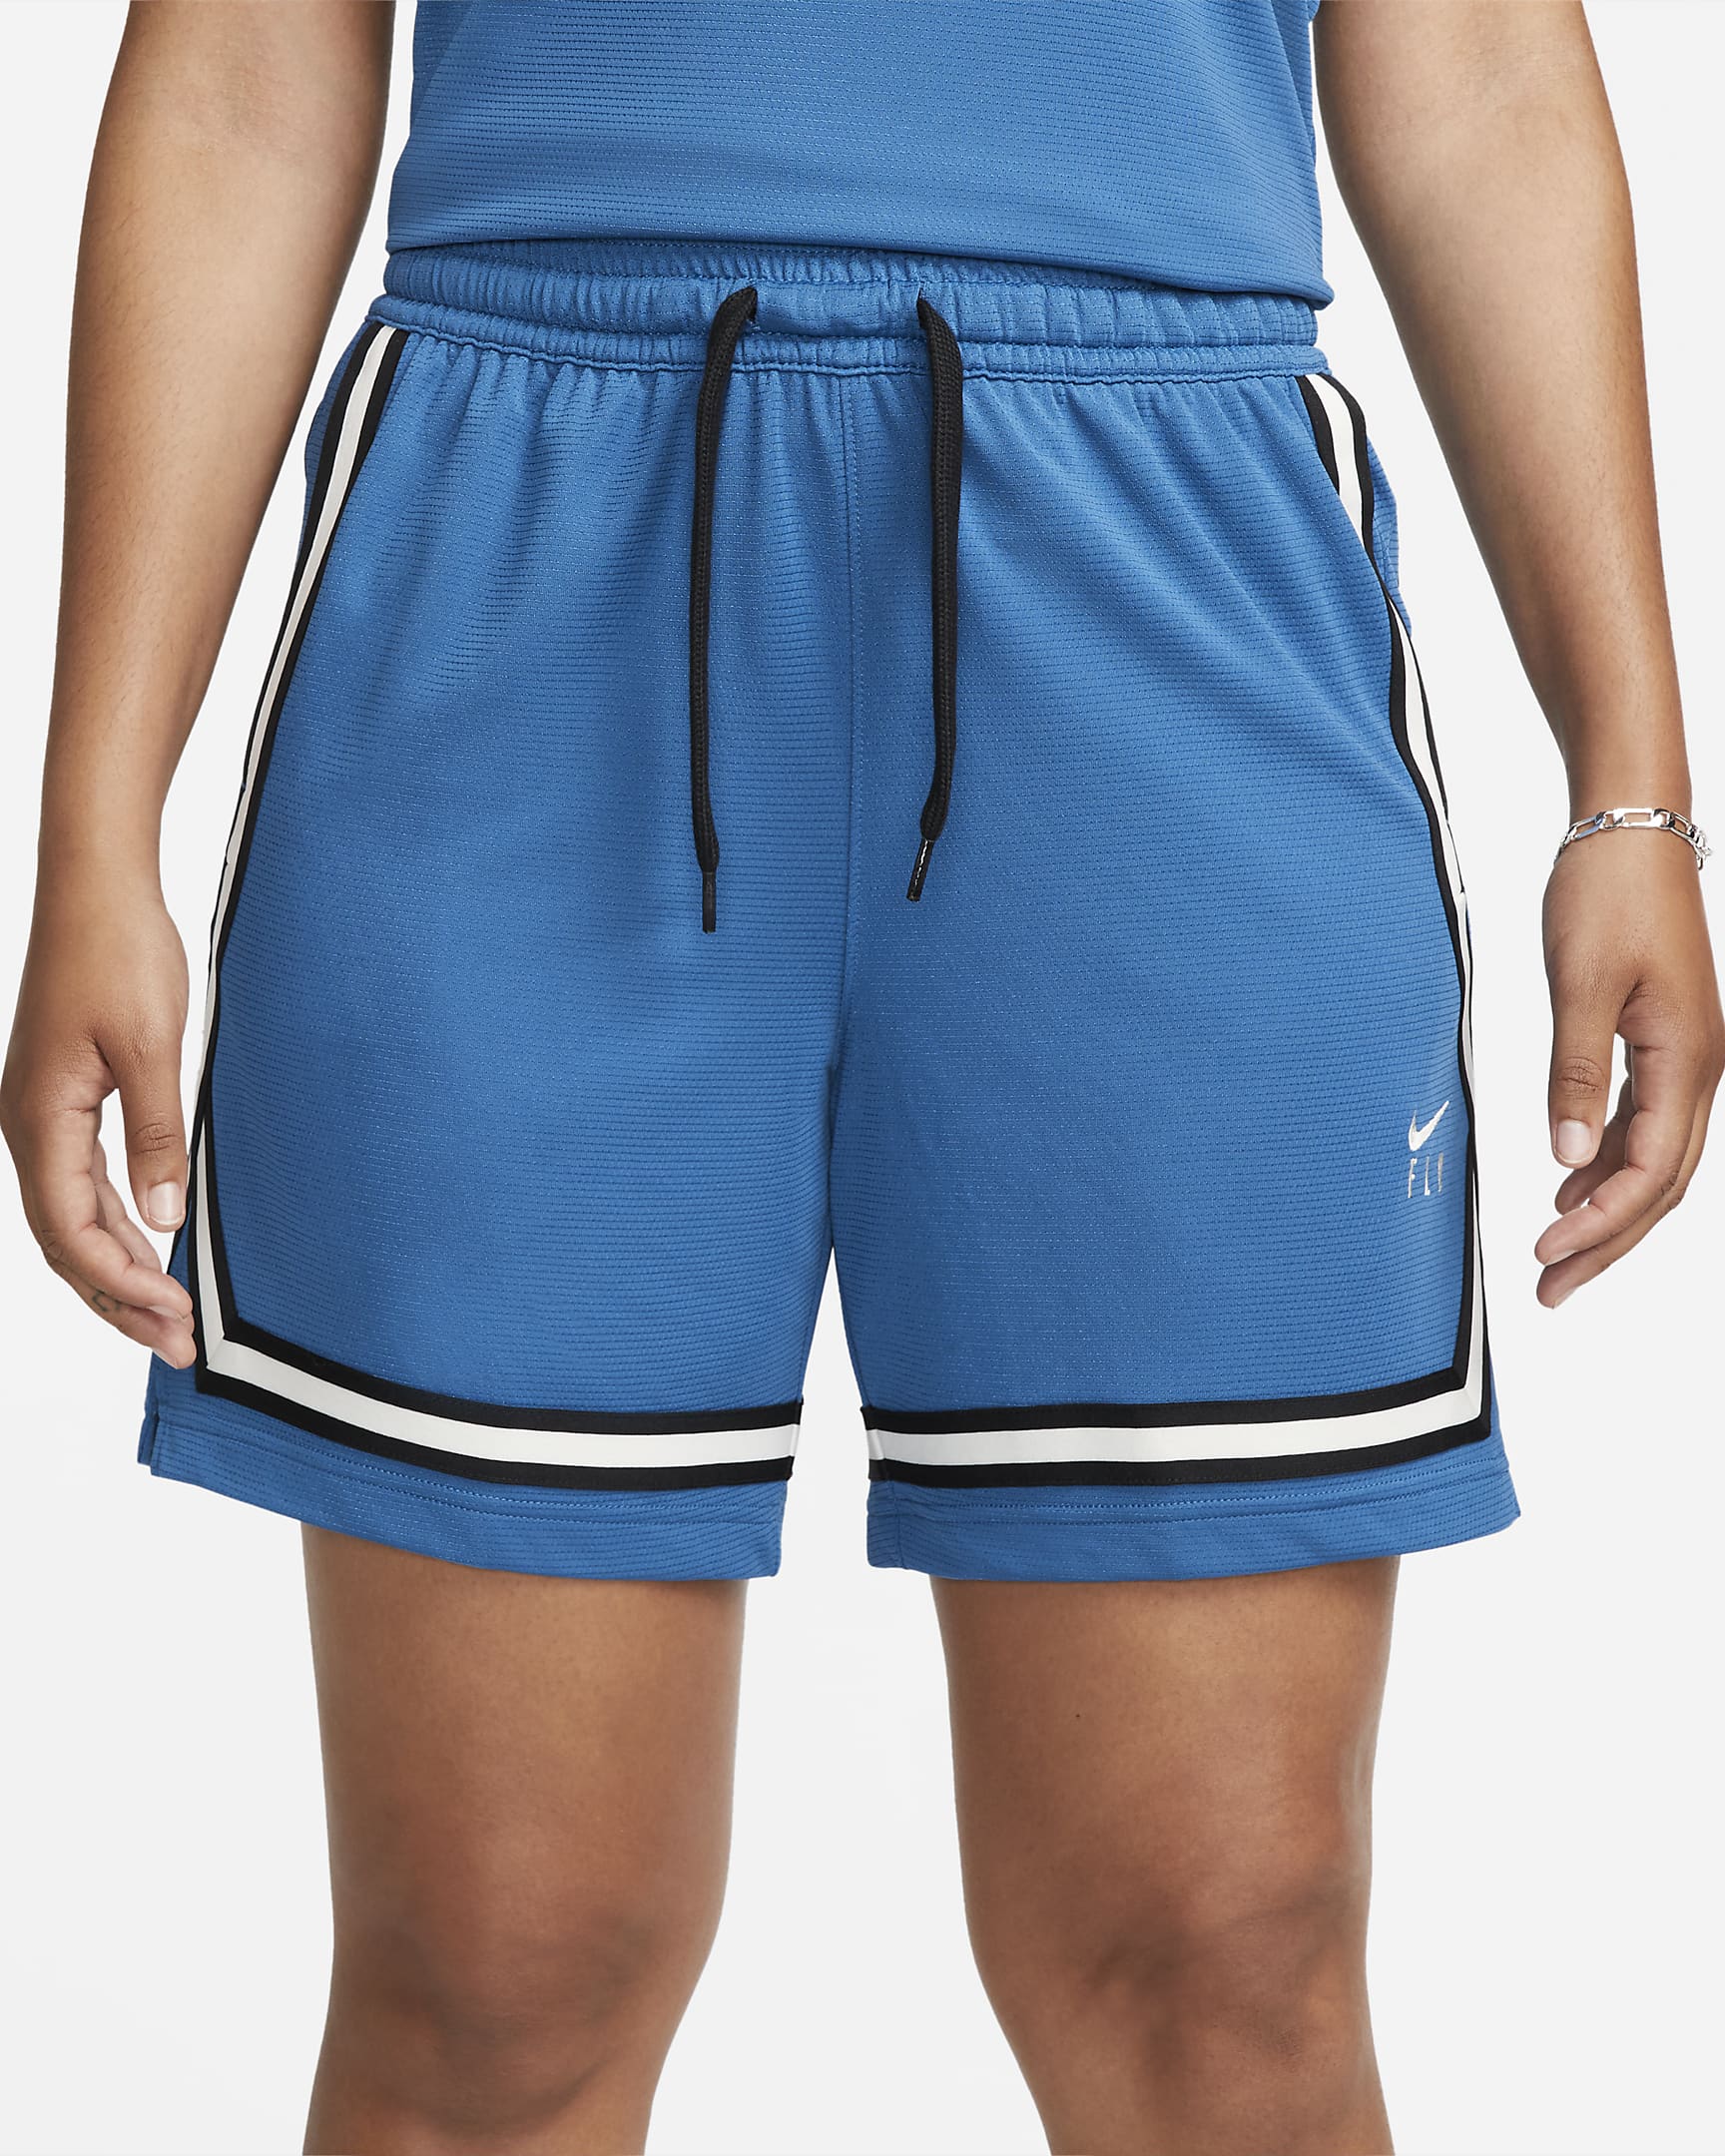 Nike Fly Crossover Women's Basketball Shorts. Nike BG